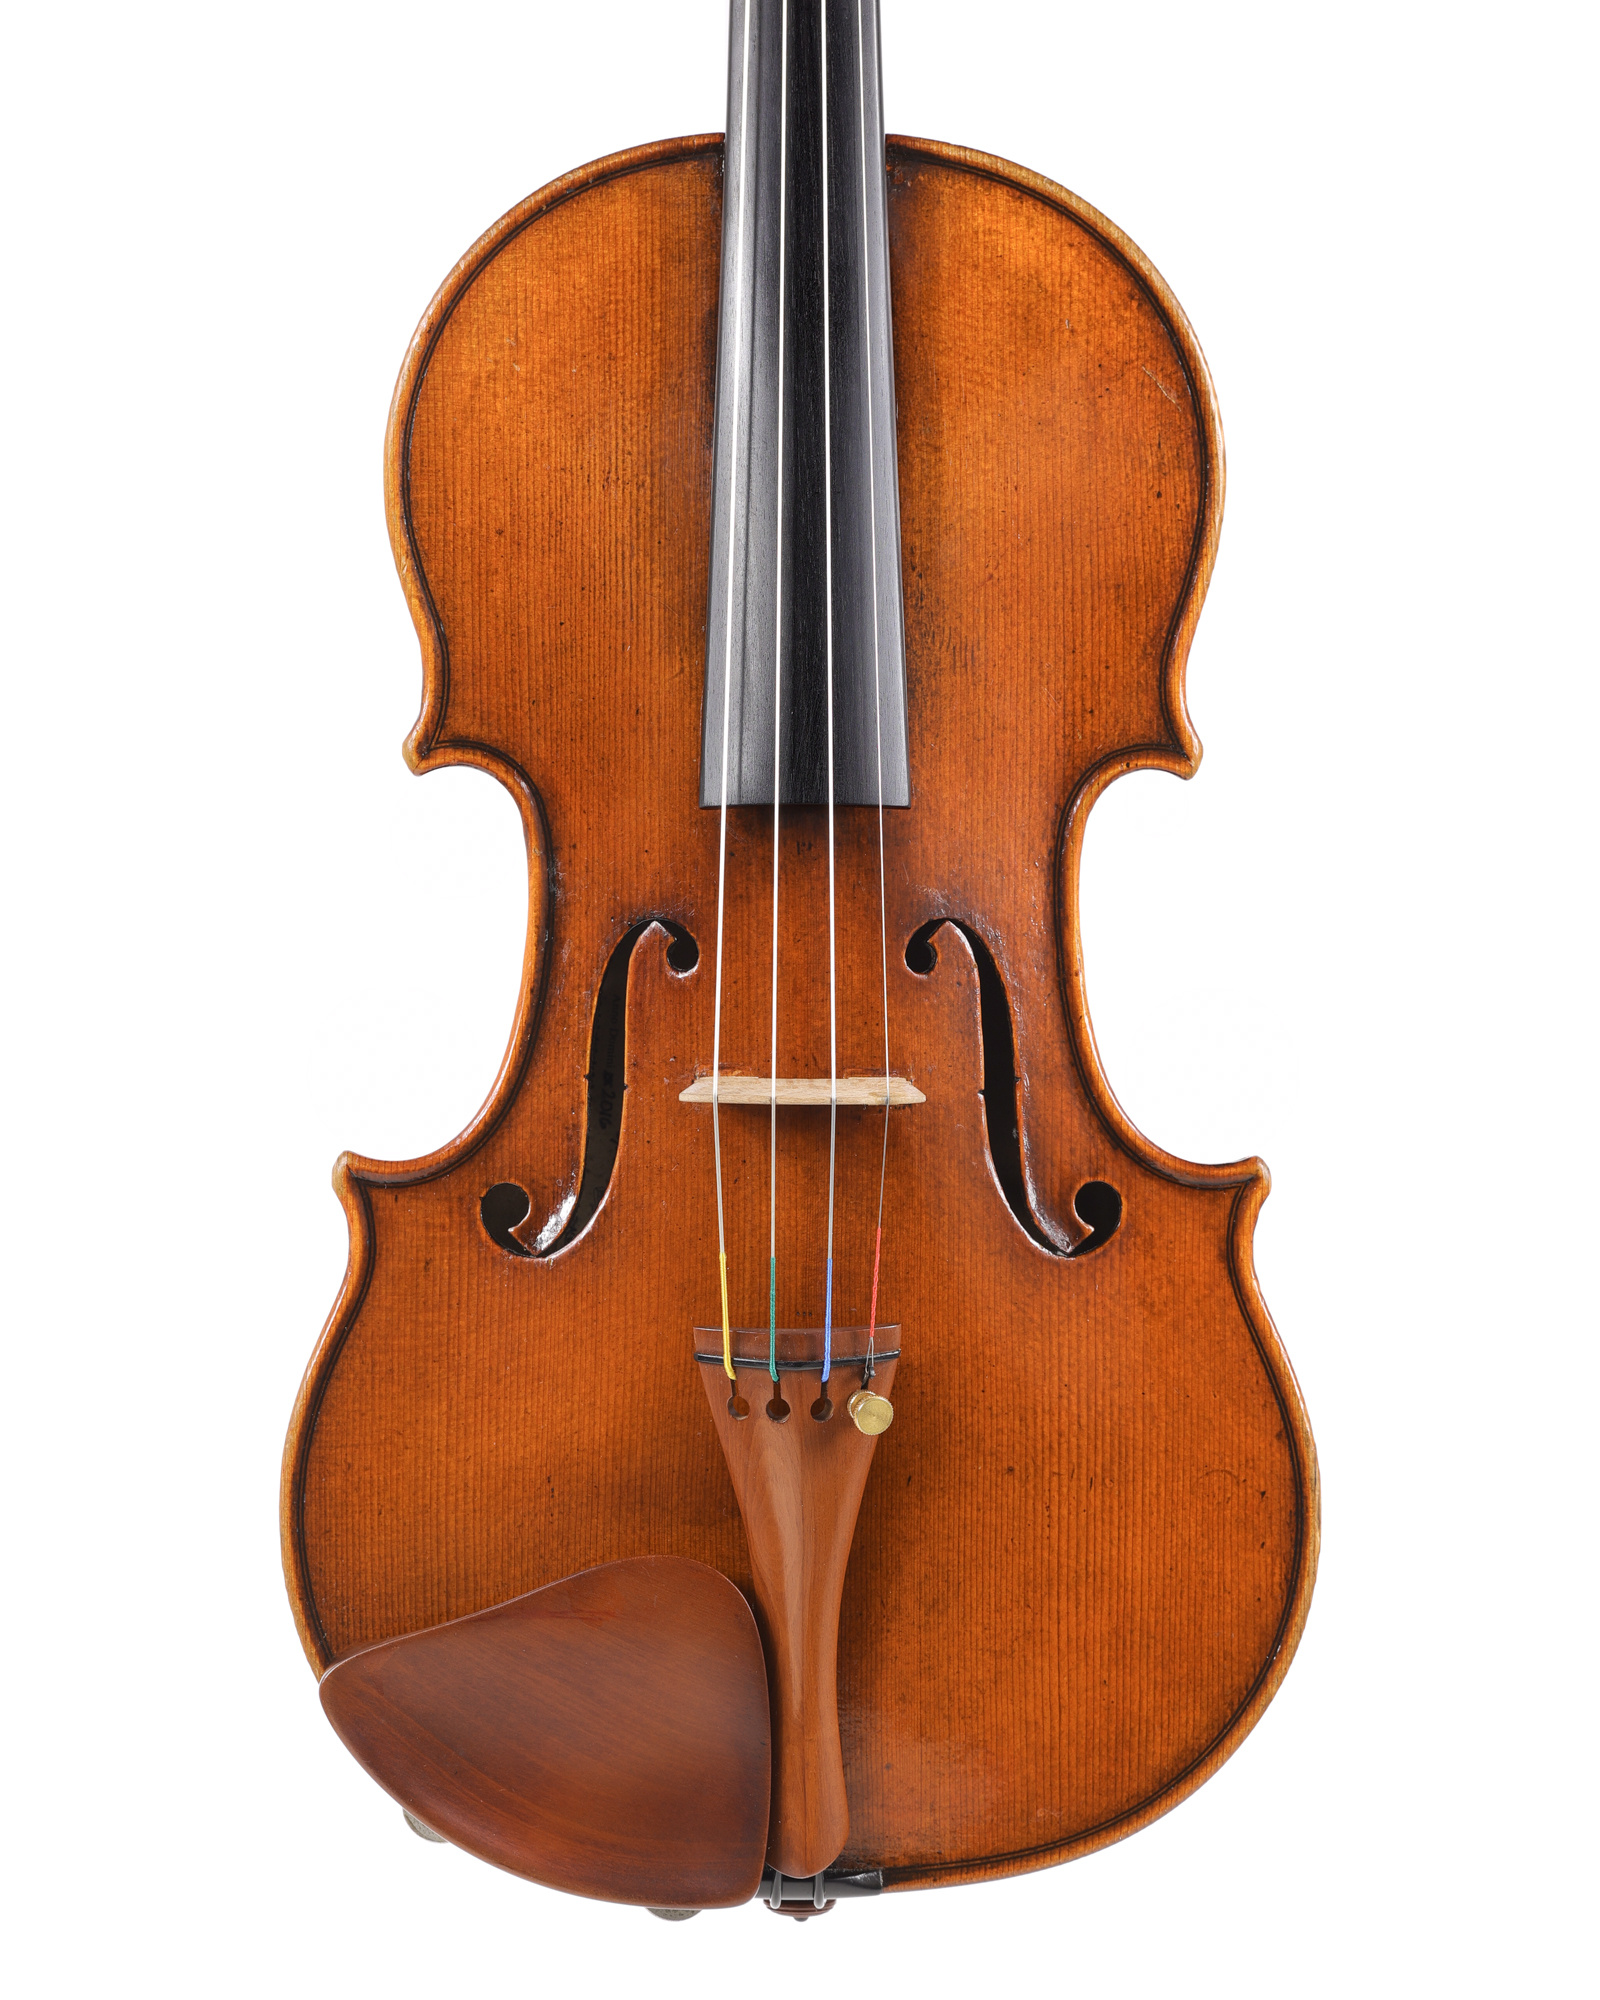 Arlie Moran antiqued violin, opus 53, one-piece back, 2016, Los Angeles, California (branded internally)